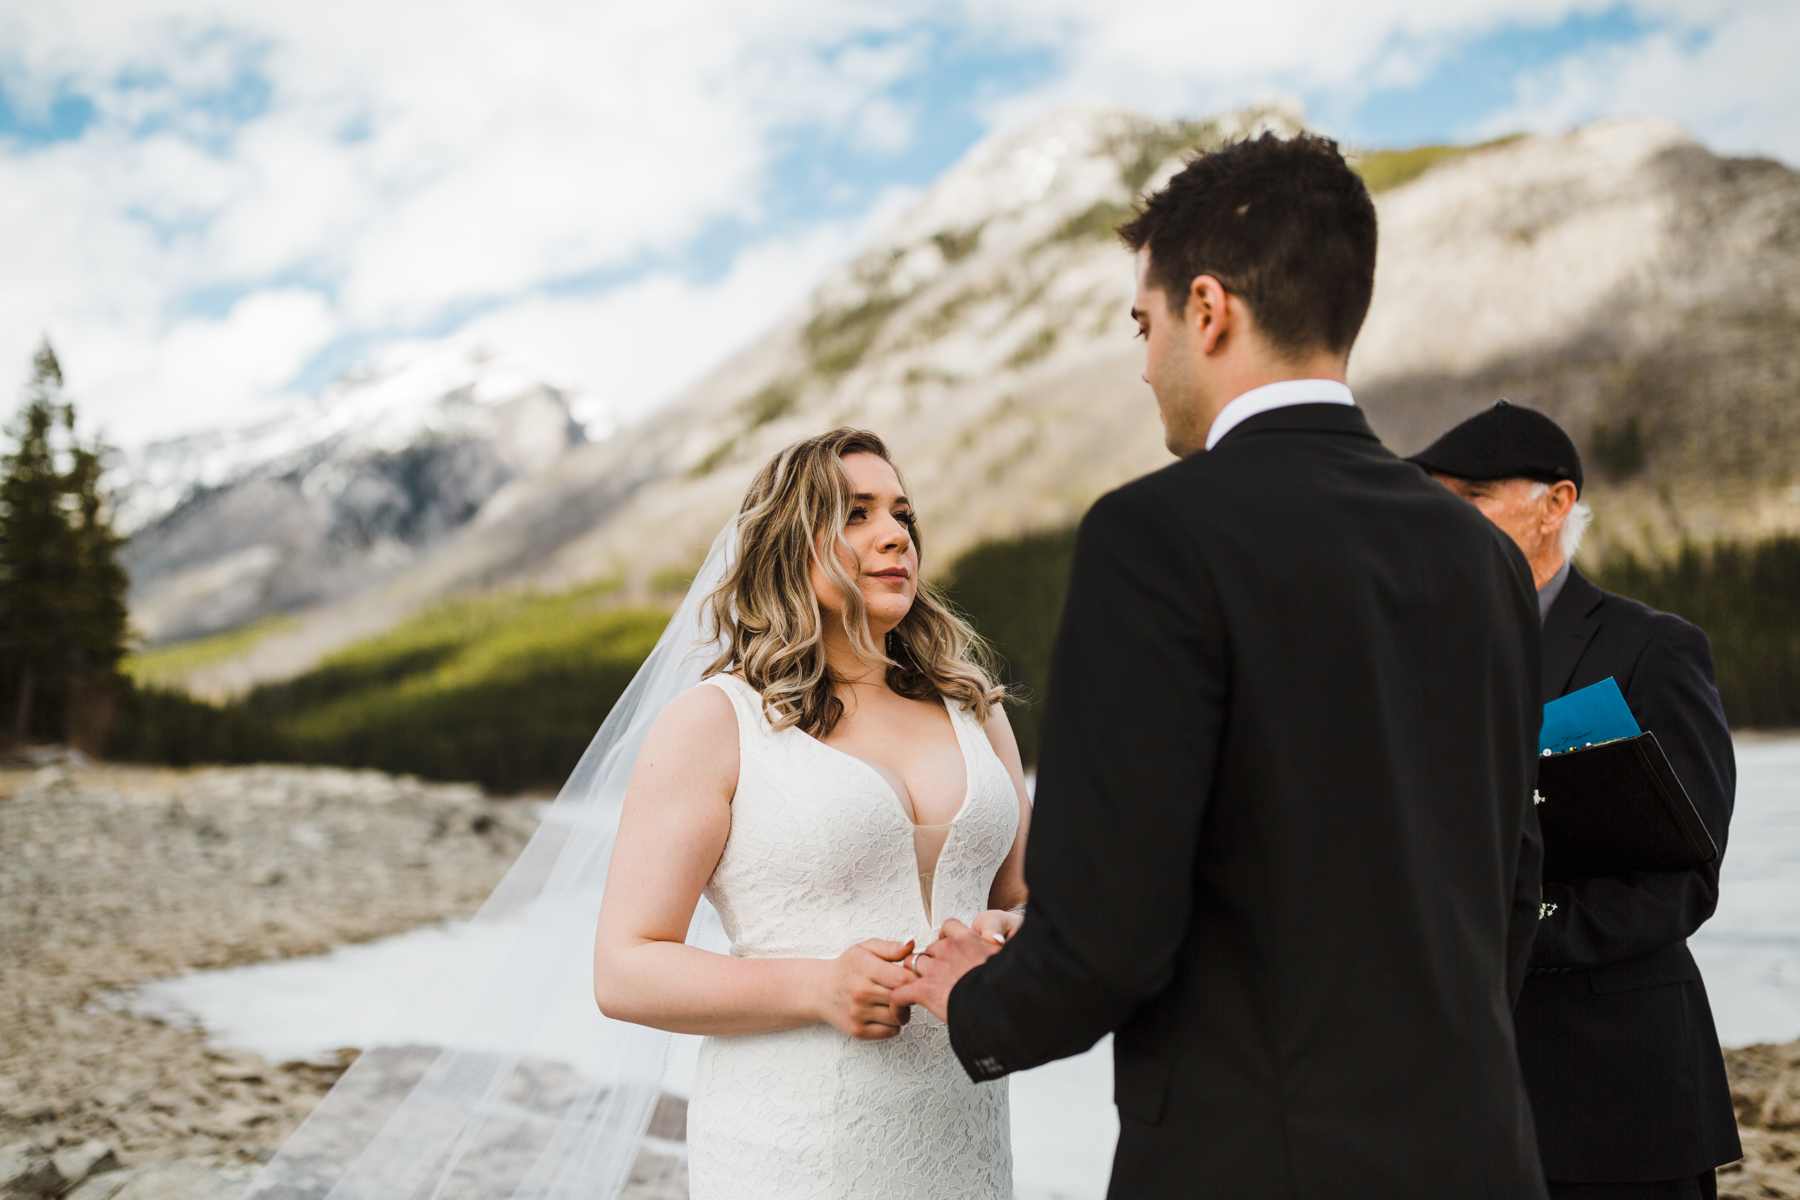 Banff Adventure Wedding Photographers for Lake Minnewanka Elopement - Image 5